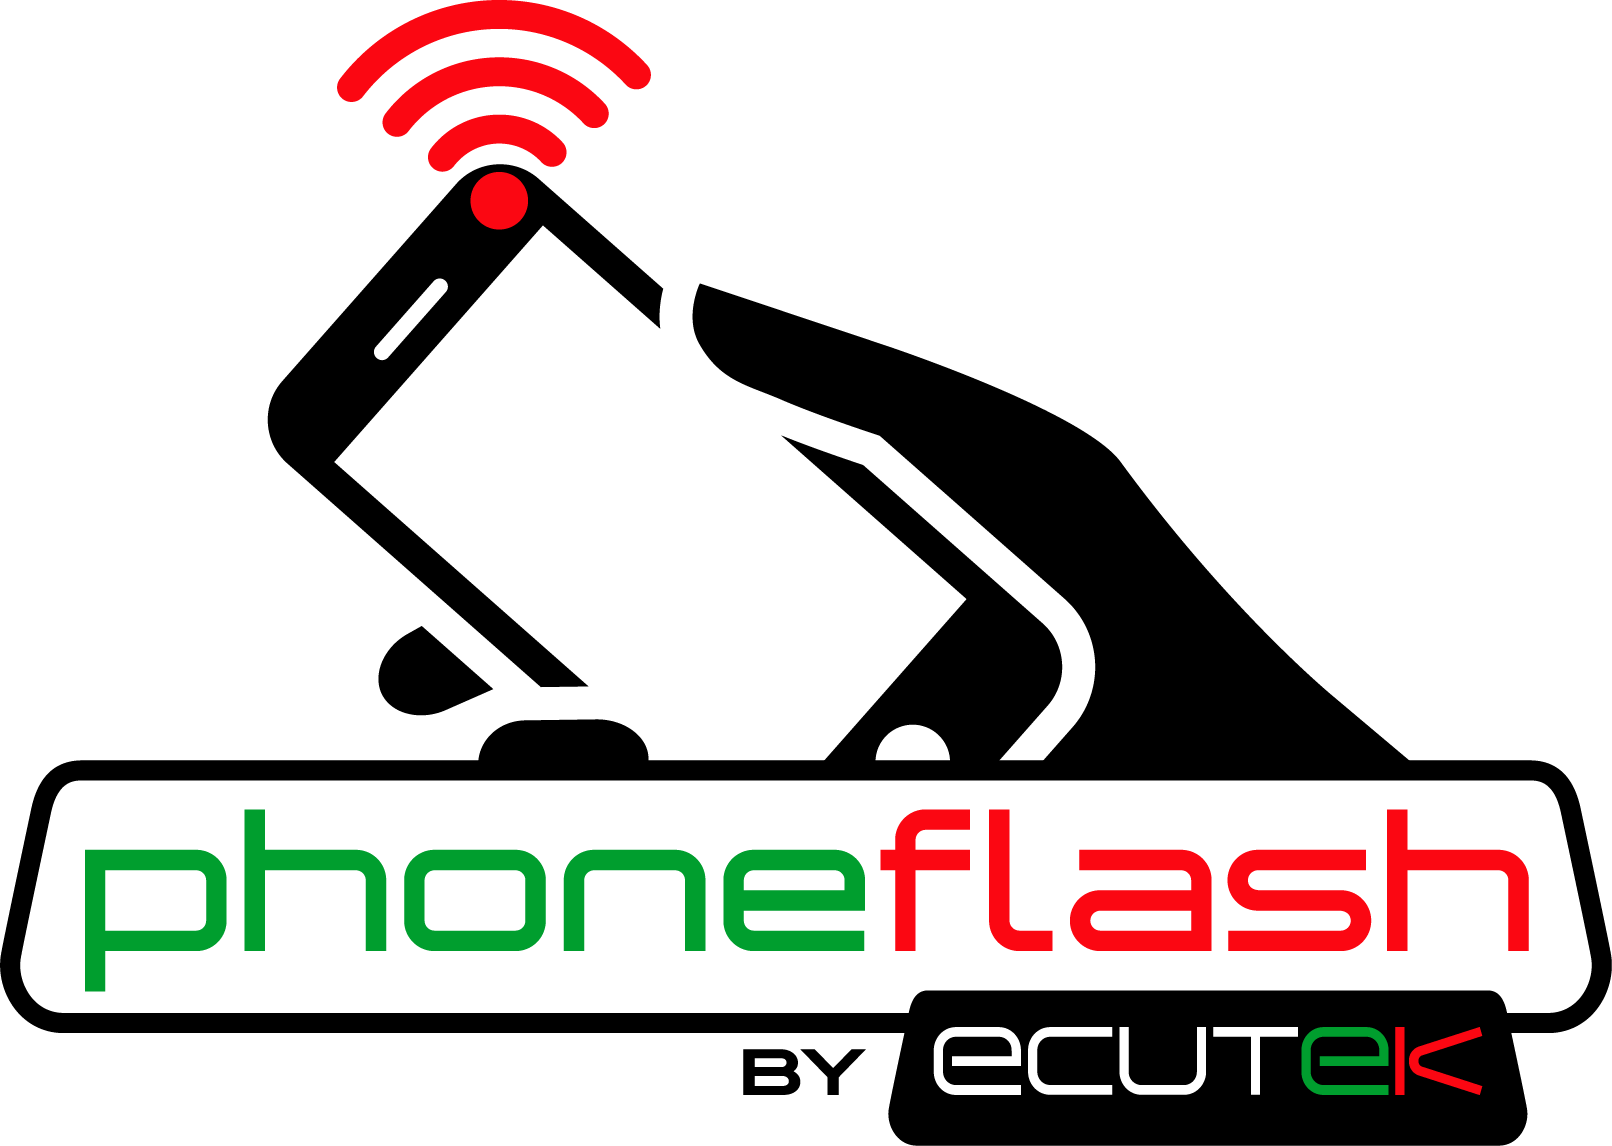 EcuTek PhoneFlash License Activation